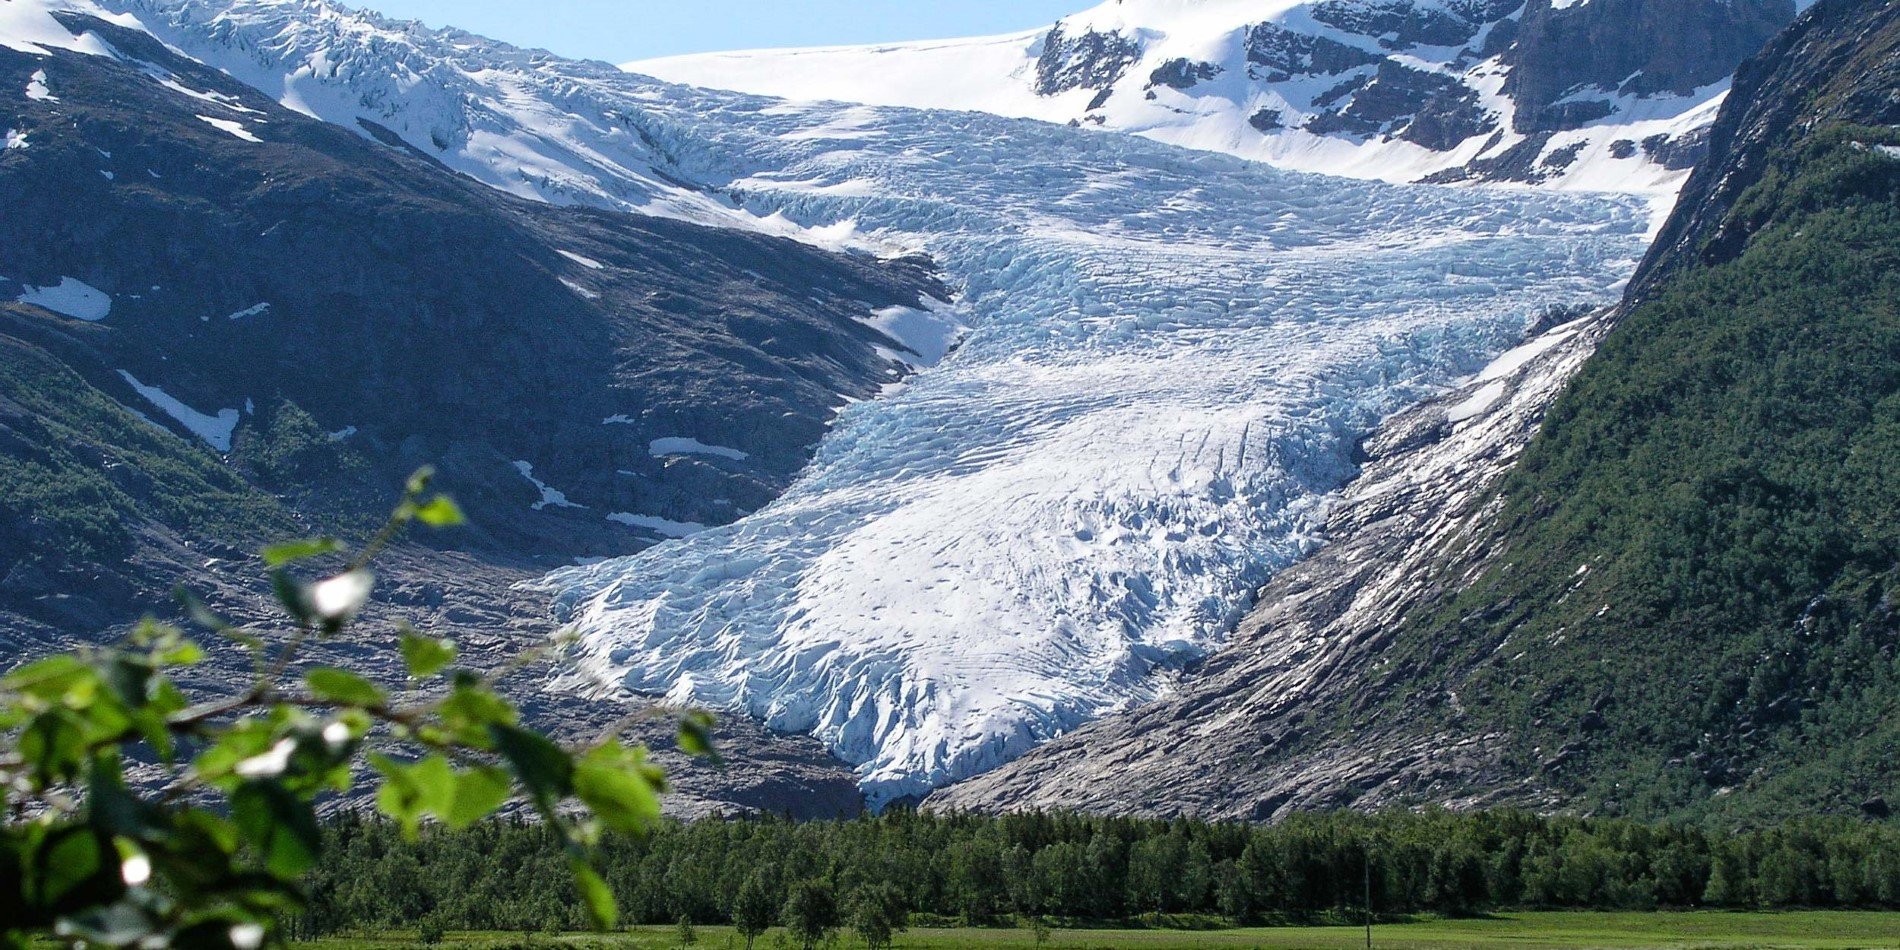 One of the most impressive views - Svartisen Glacier